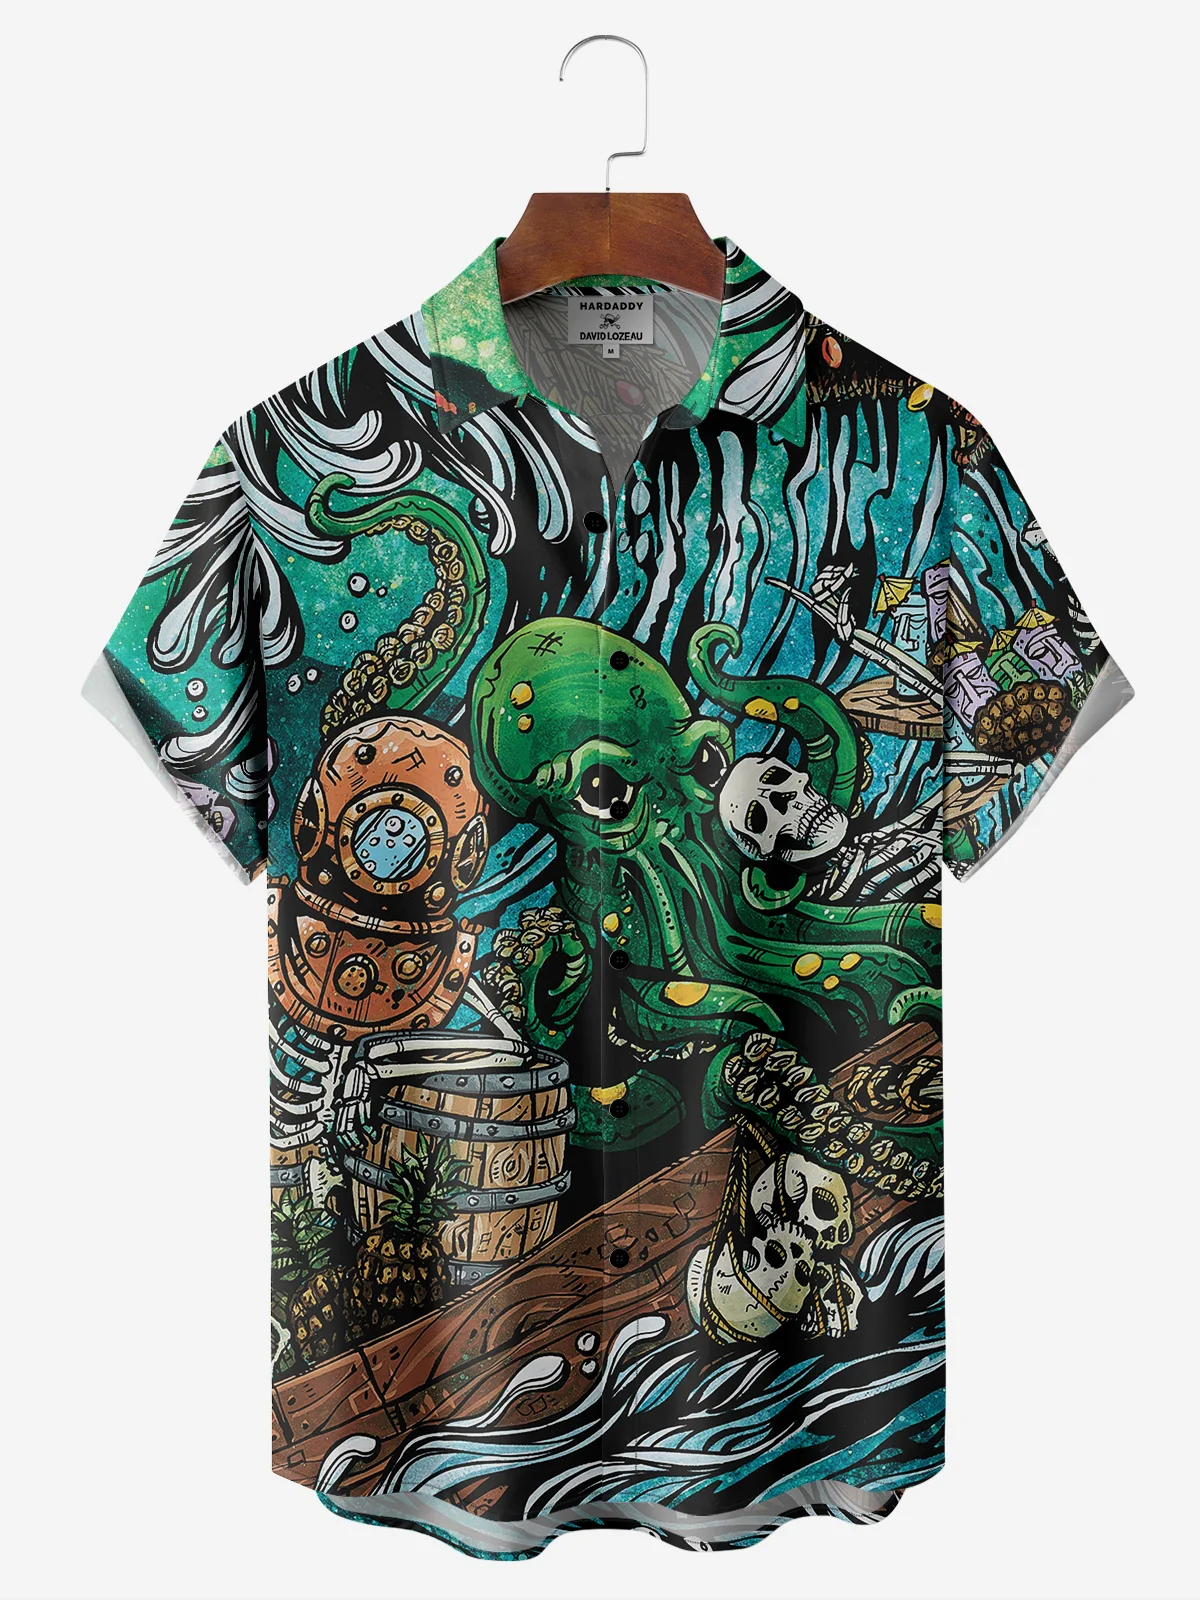 Octopus Adventure Shirt By David Lozeau